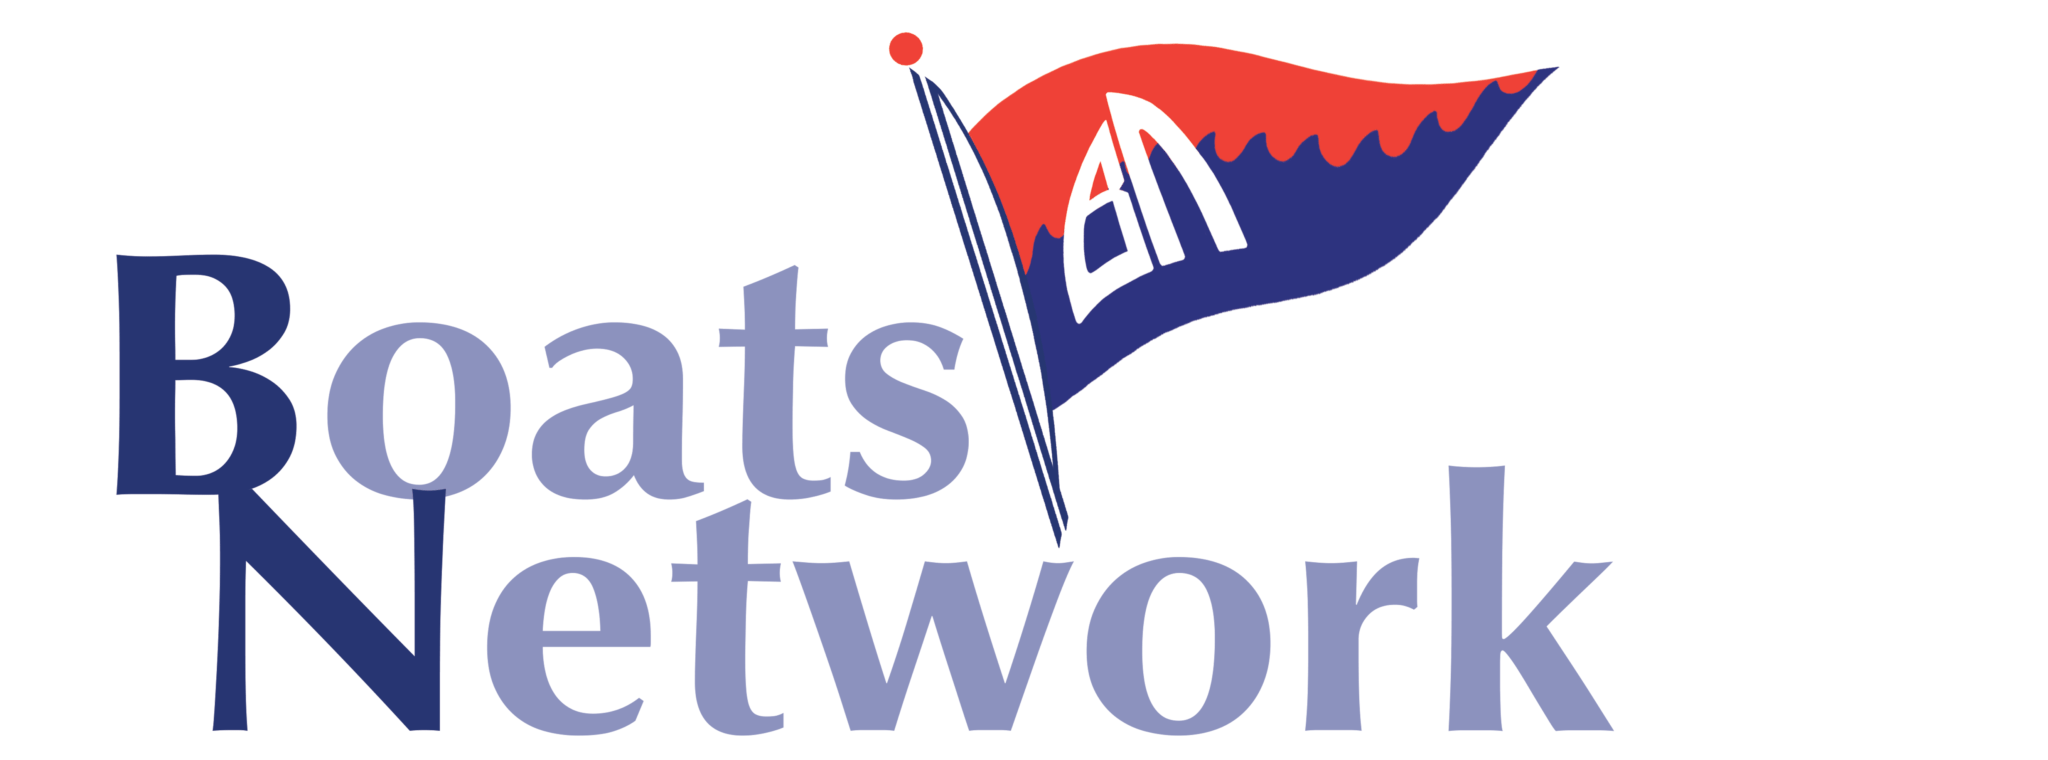 Boats Network Logo